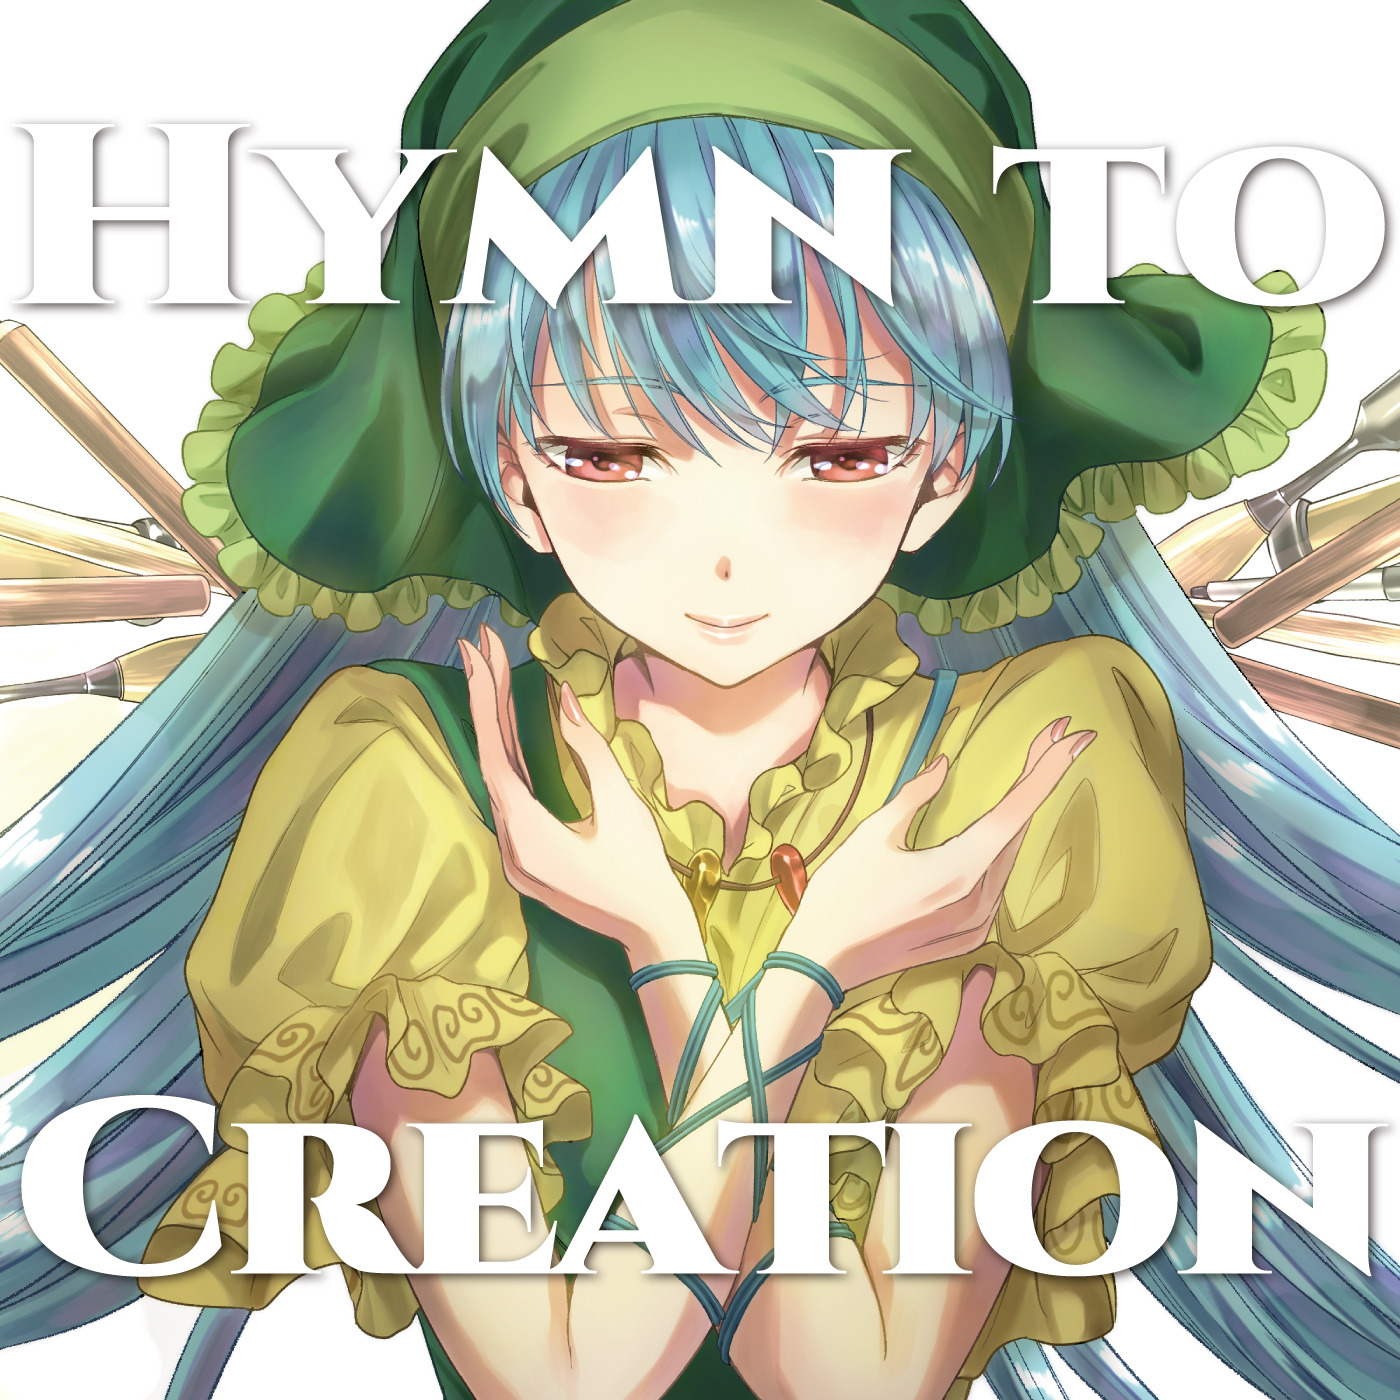 ASHI-0020 / HYMN TO CREATION